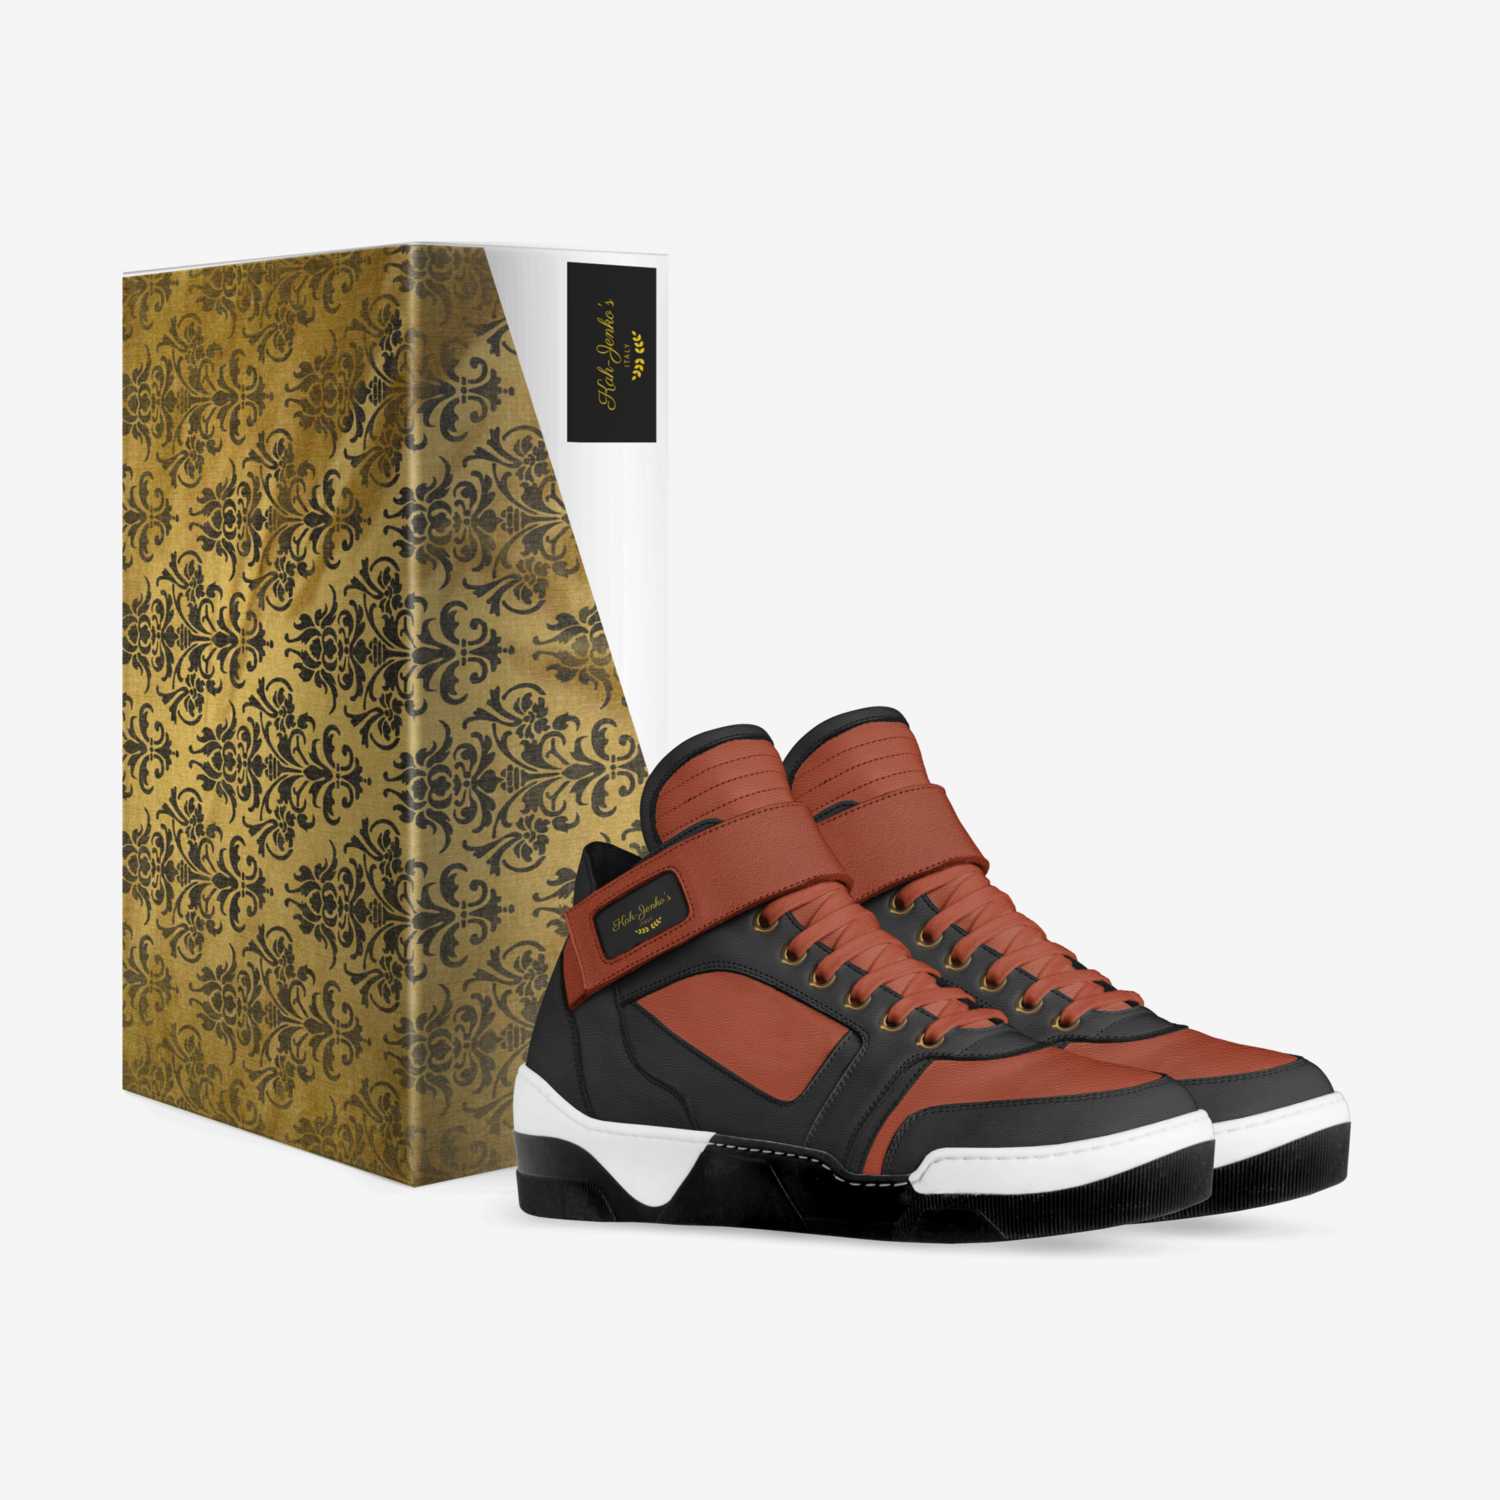 Kah-Jenko's custom made in Italy shoes by Eyoel Alebachew | Box view